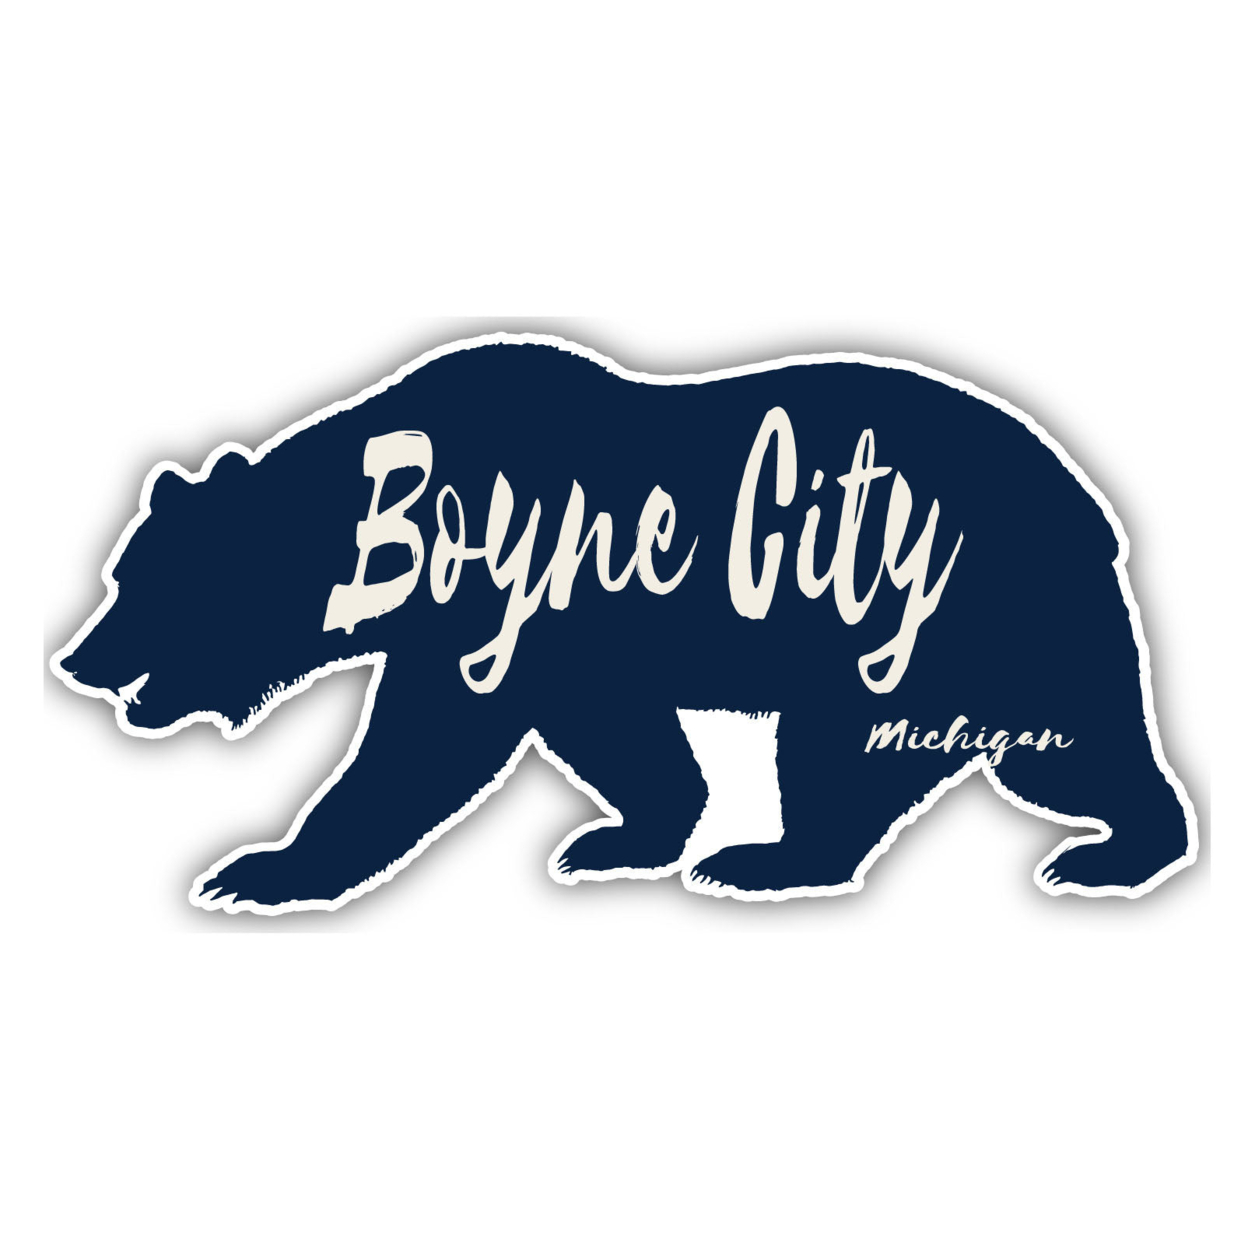 Boyne City Michigan Souvenir Decorative Stickers (Choose Theme And Size) - 4-Pack, 10-Inch, Adventures Awaits